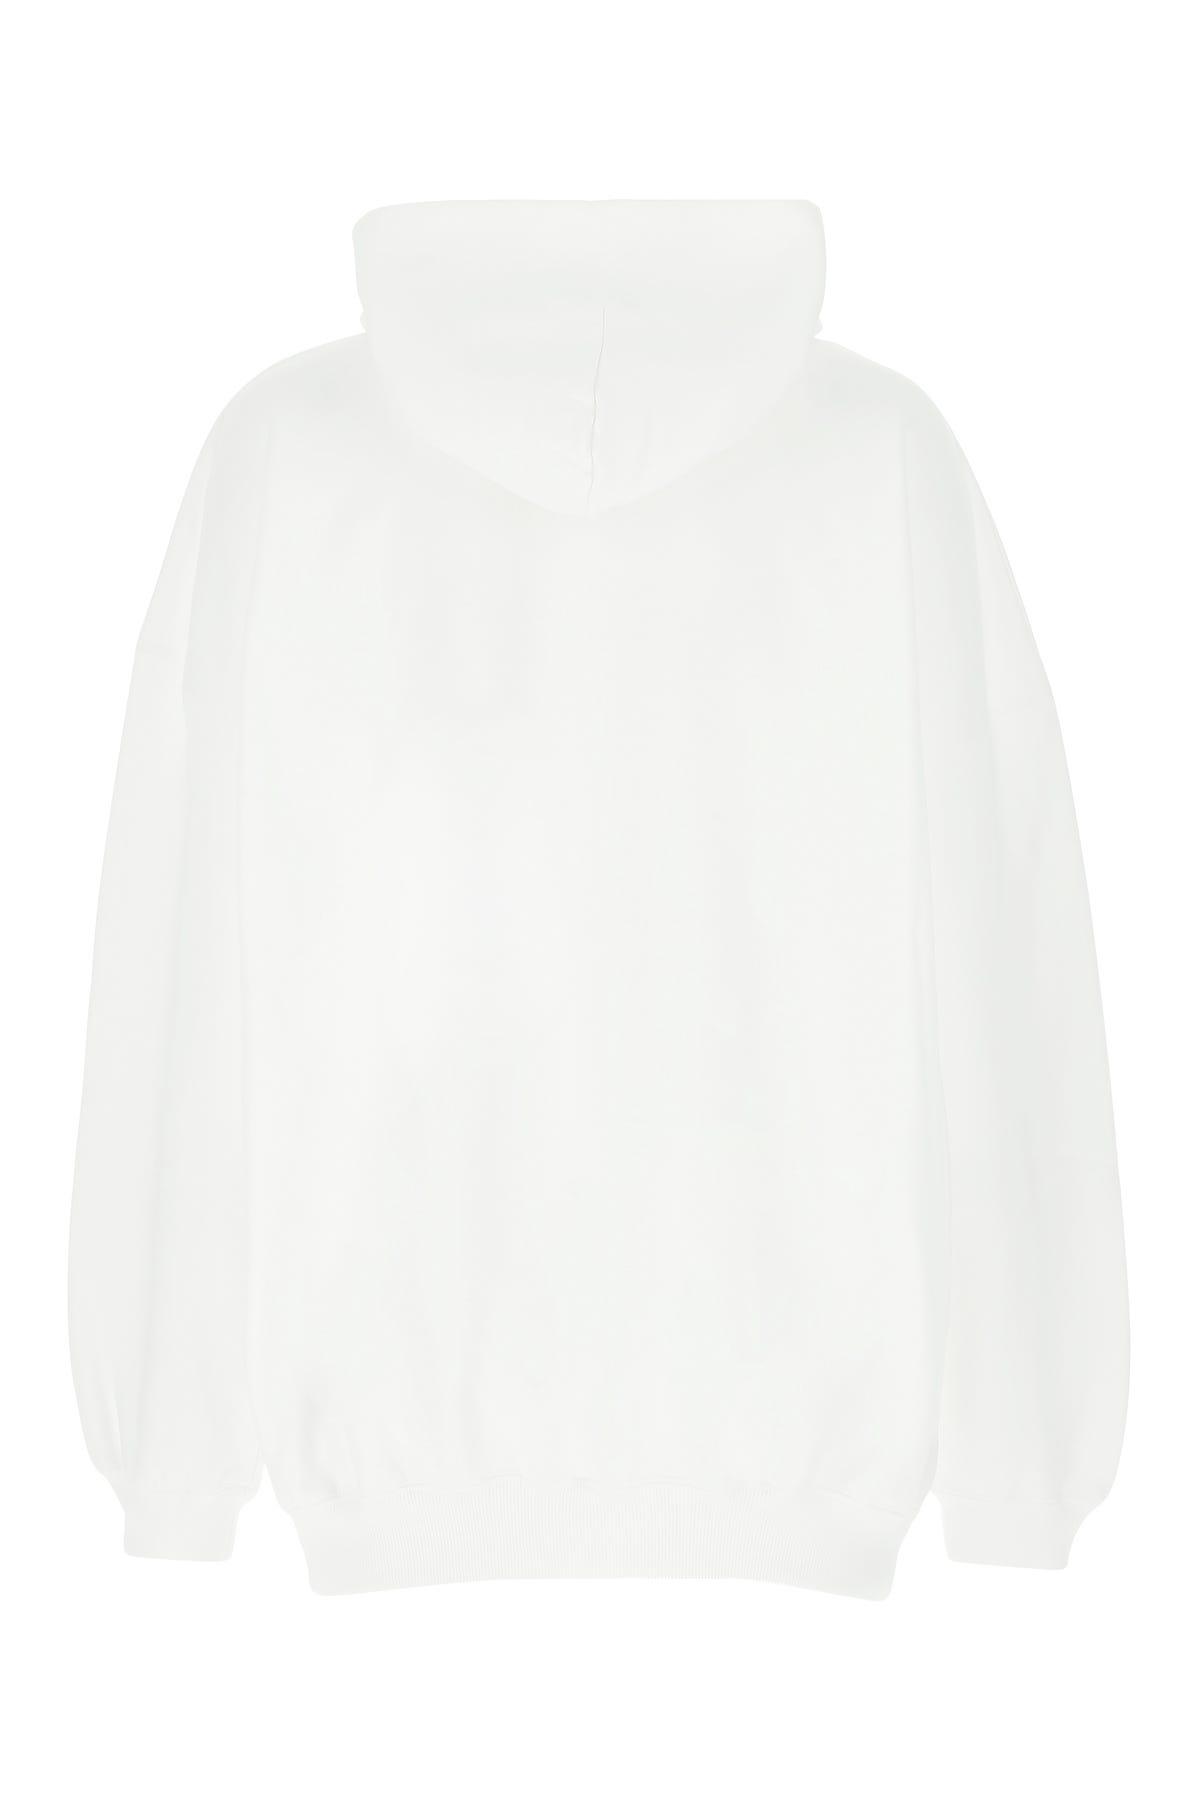 Balenciaga White Cotton Oversize Sweatshirt | Lyst